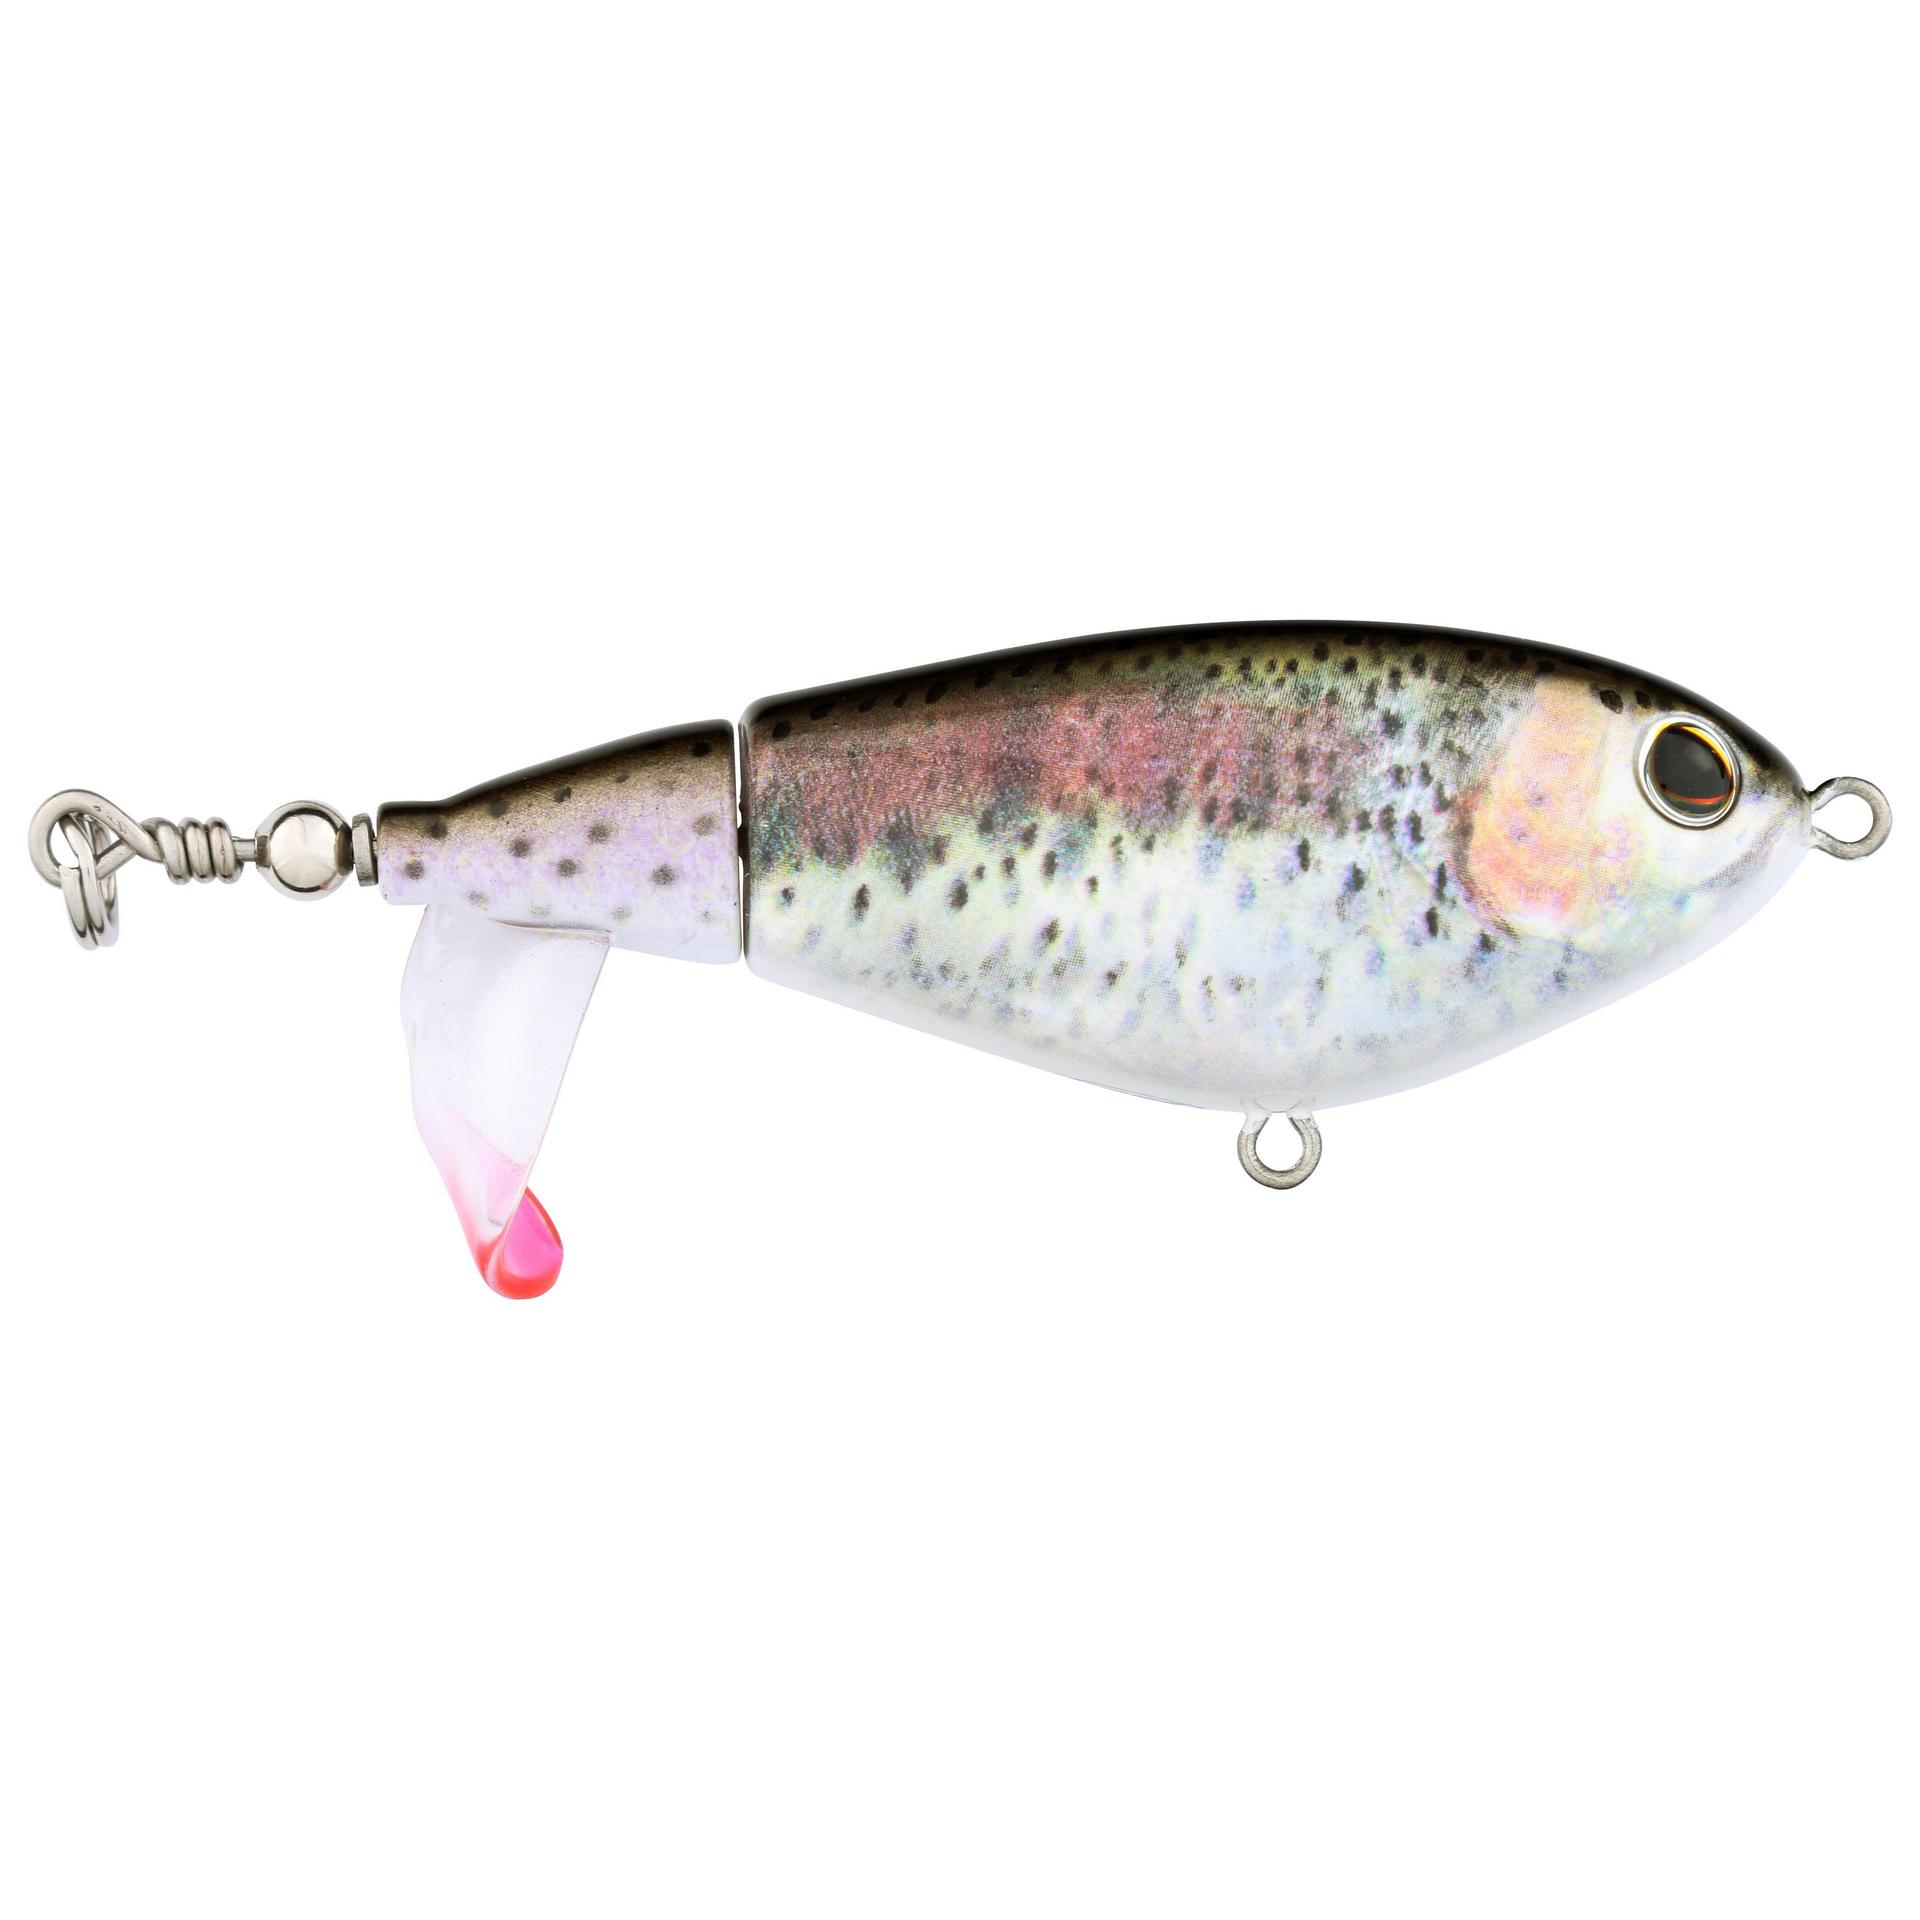 Berkley Choppo HDRainbowTrout 75 alt1 | Berkley Fishing